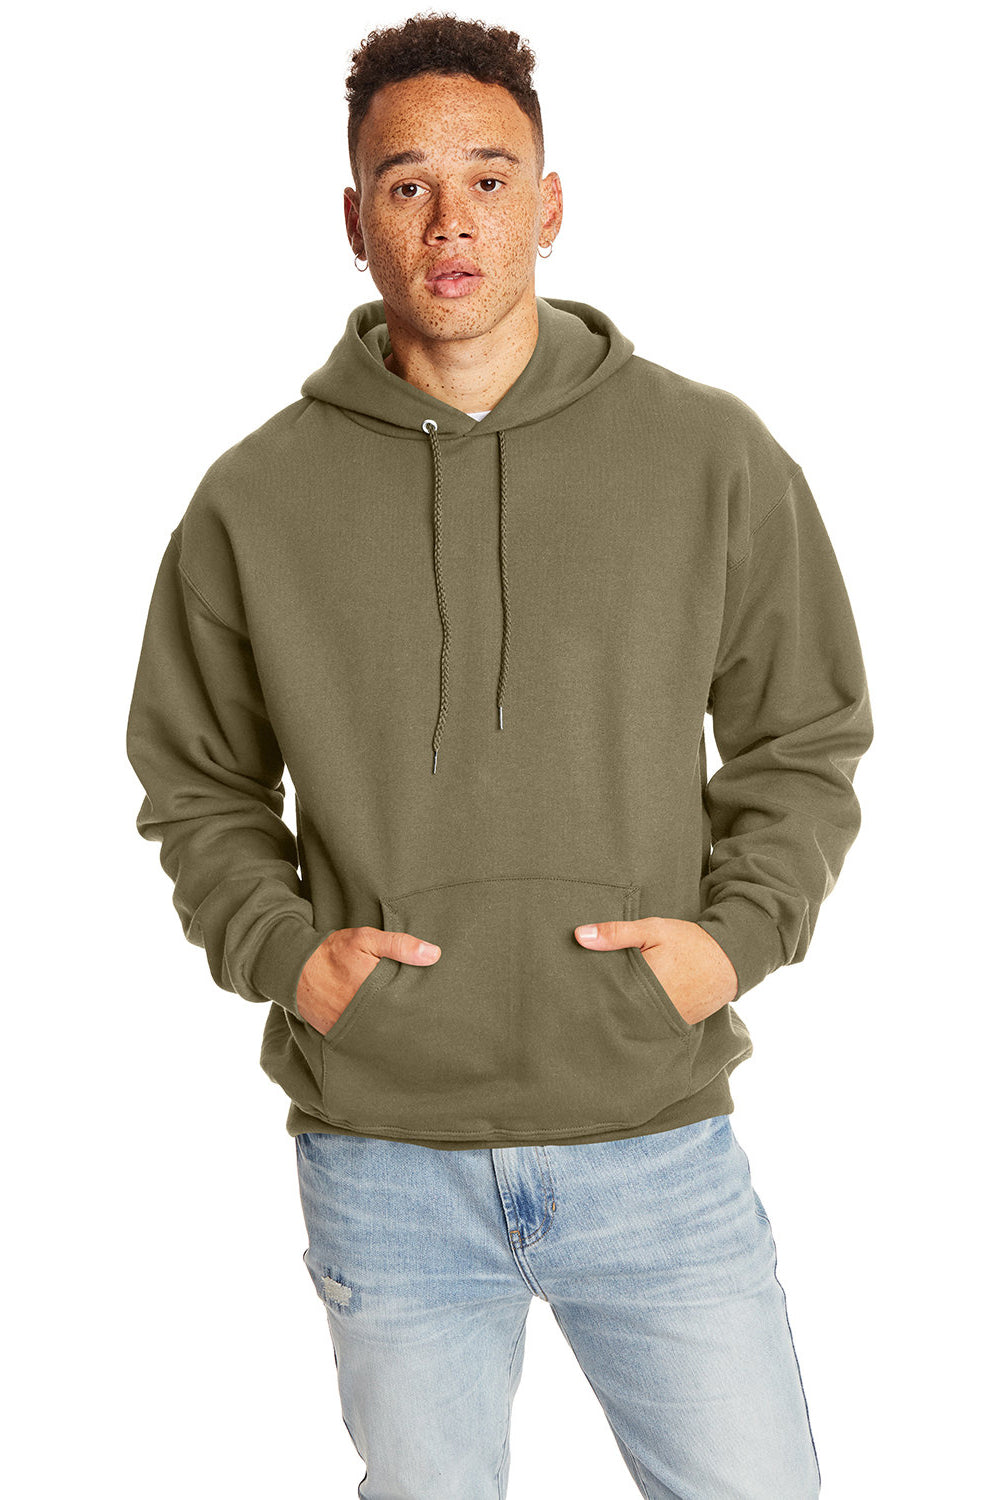 Hanes F170 Mens Ultimate Cotton PrintPro XP Hooded Sweatshirt Hoodie Oregano Front